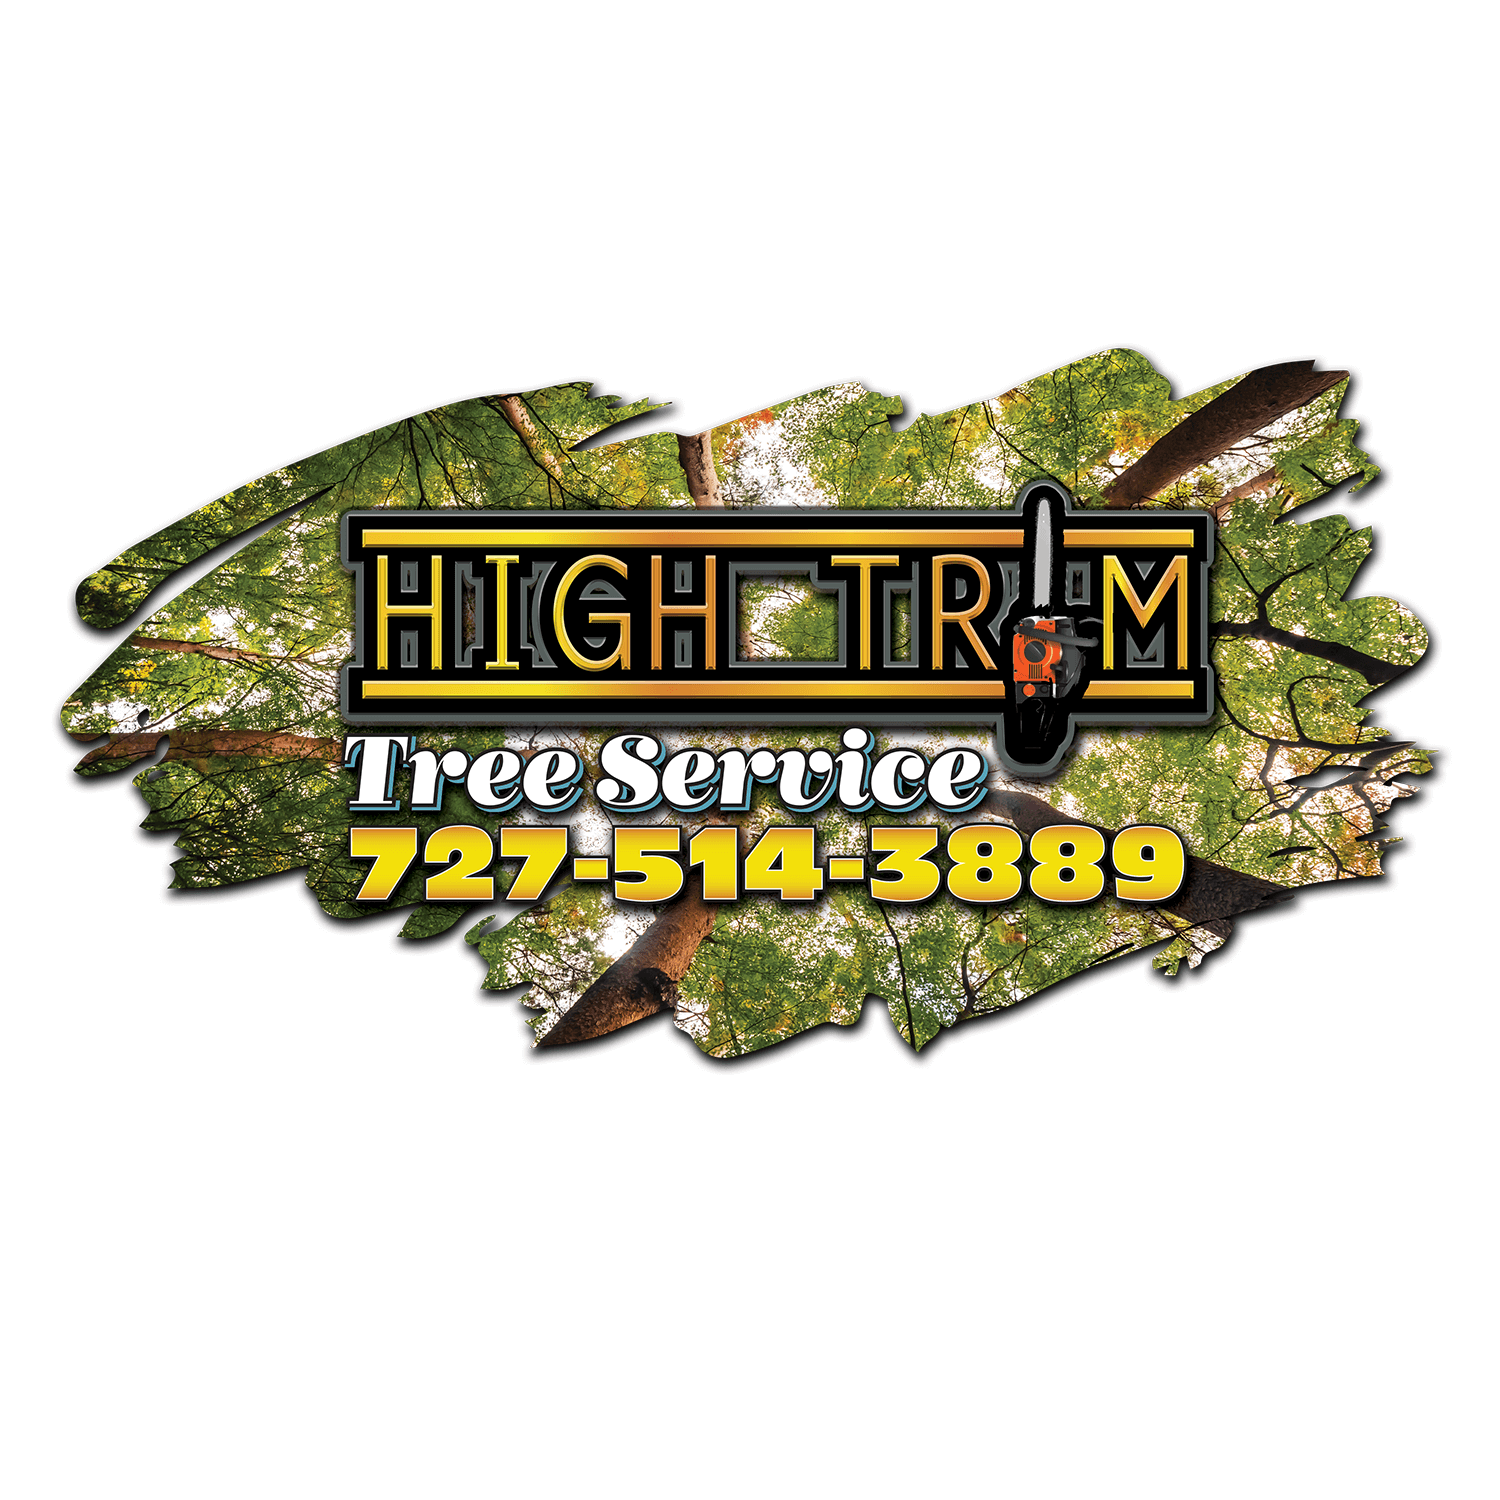 High Trim Tree Service